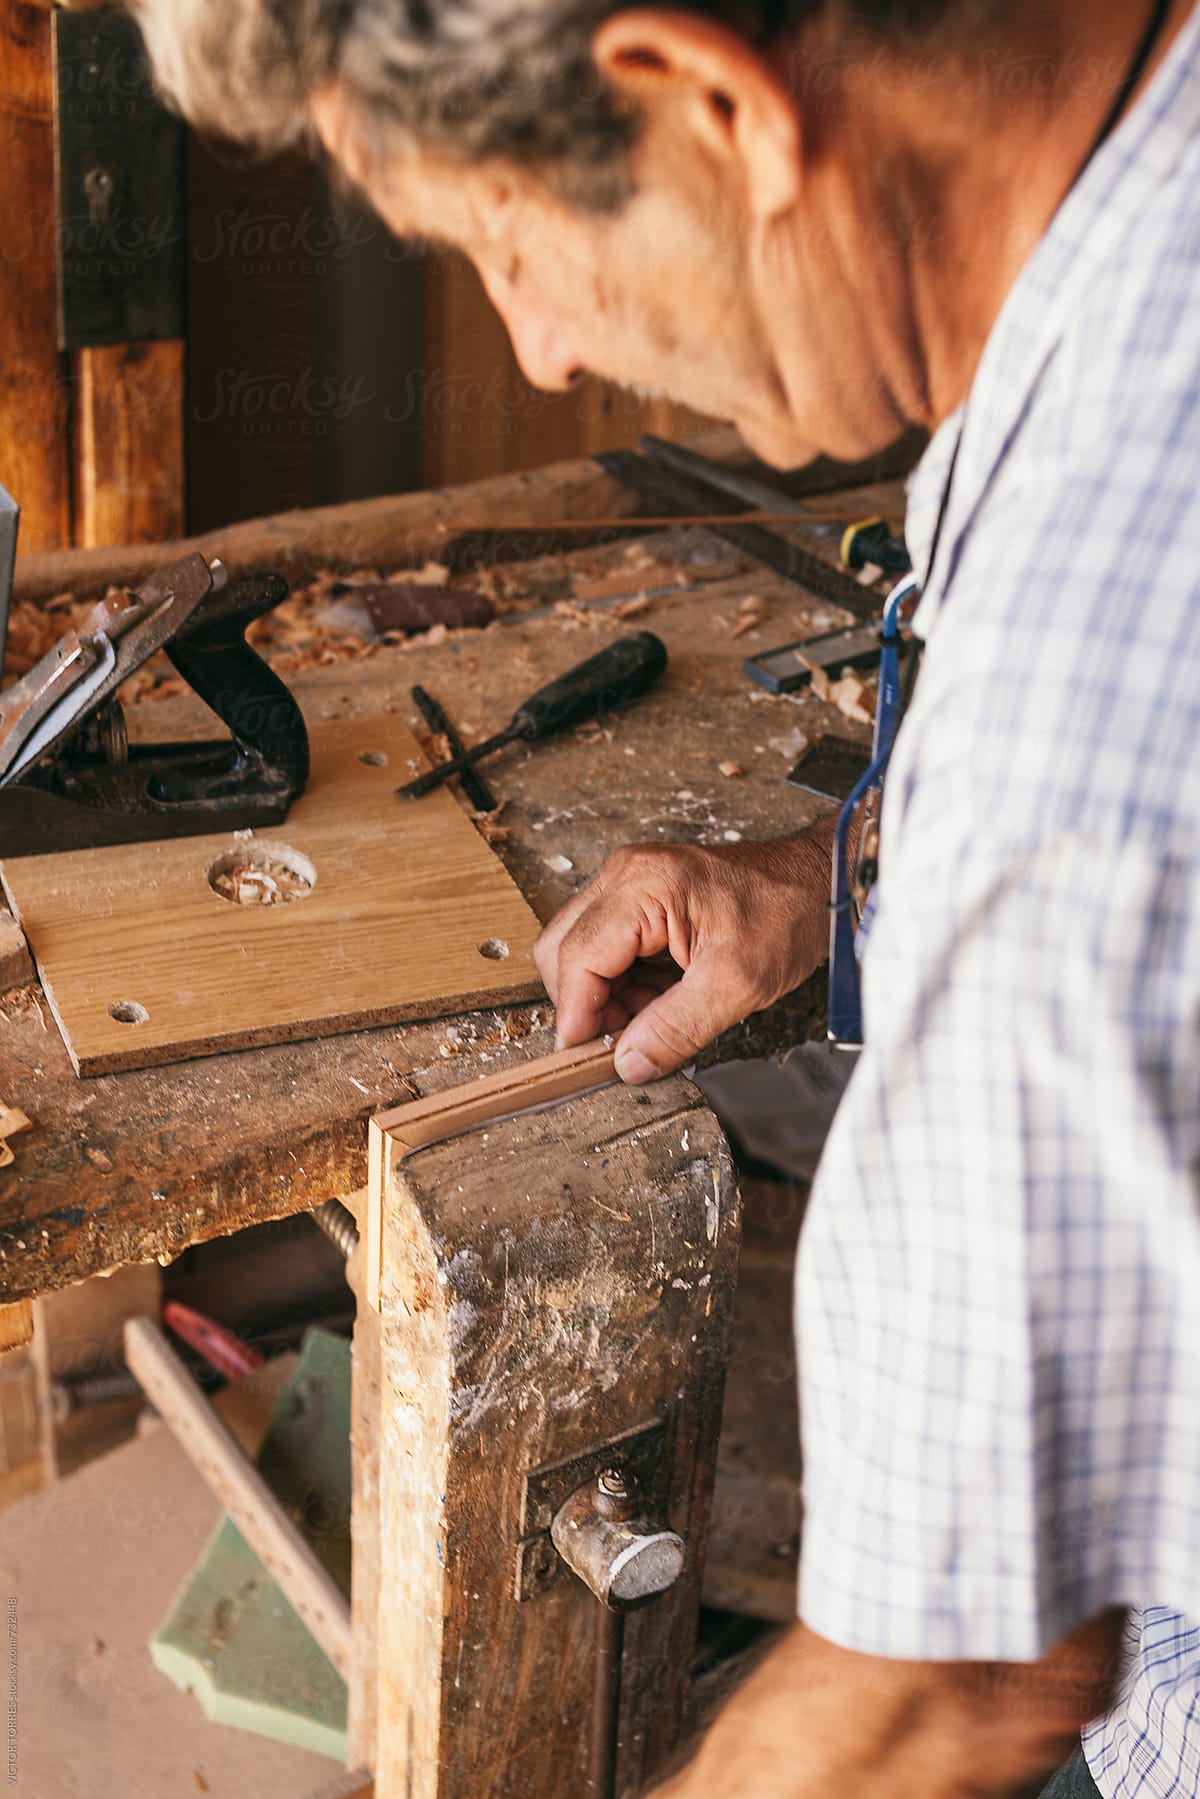 Senior Carpenter Working in His Workshop